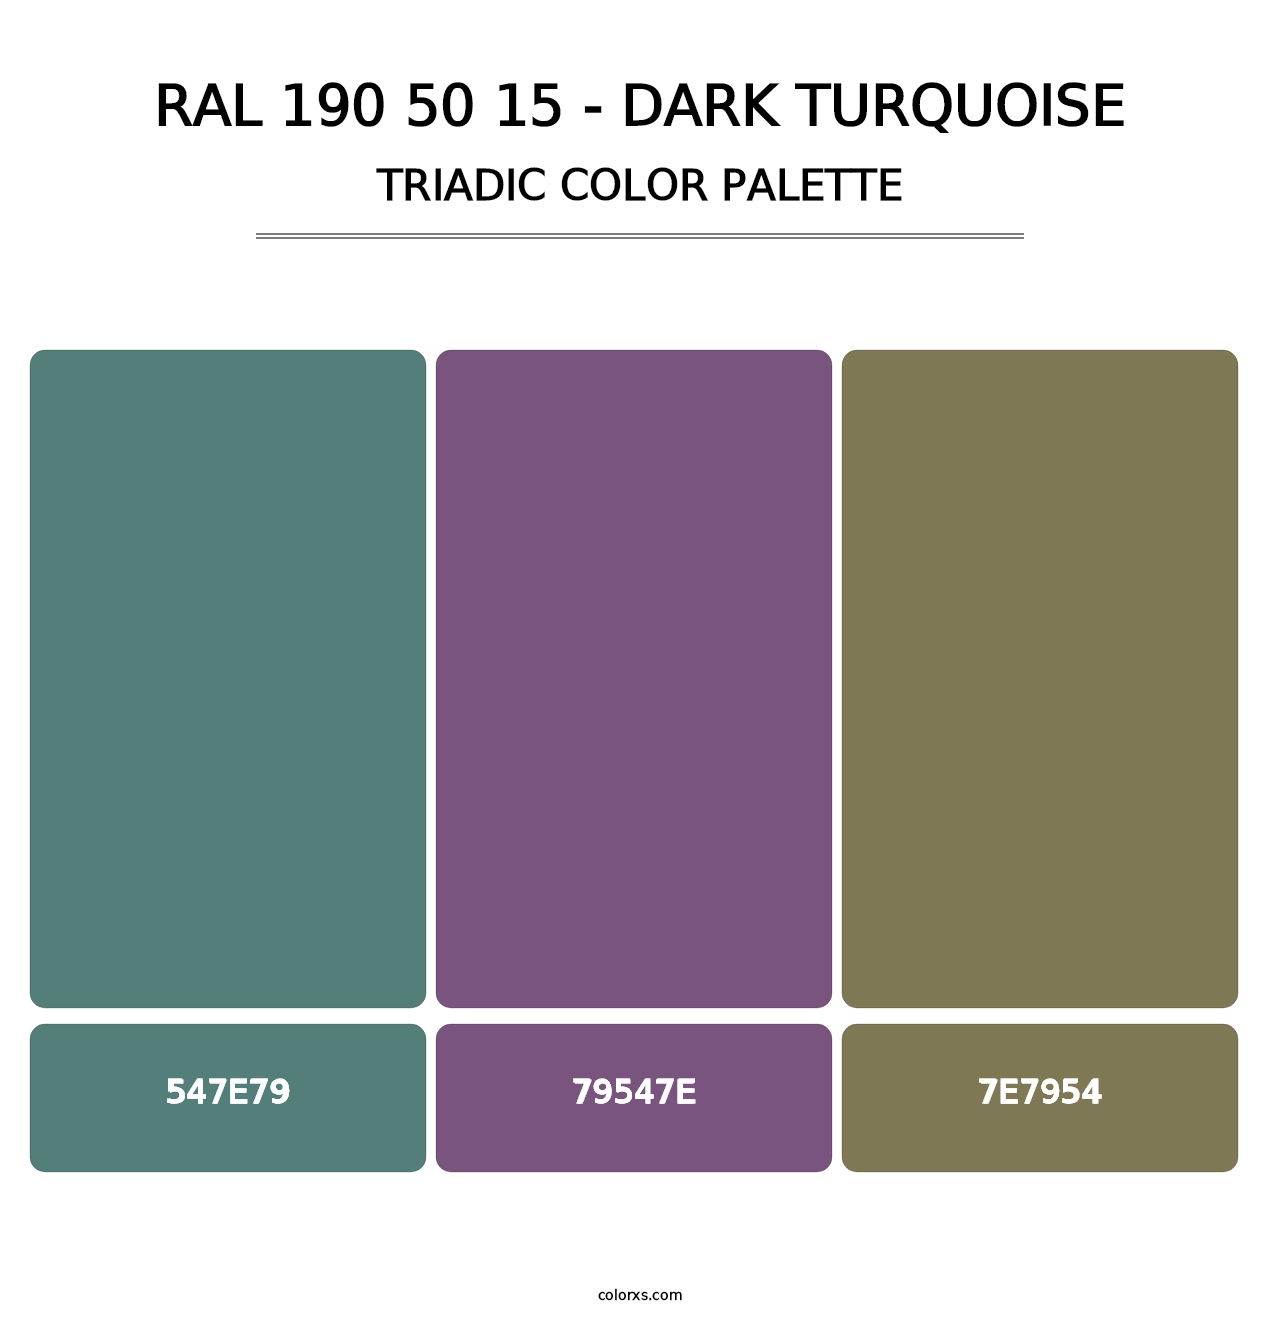 RAL 190 50 15 - Dark Turquoise - Triadic Color Palette